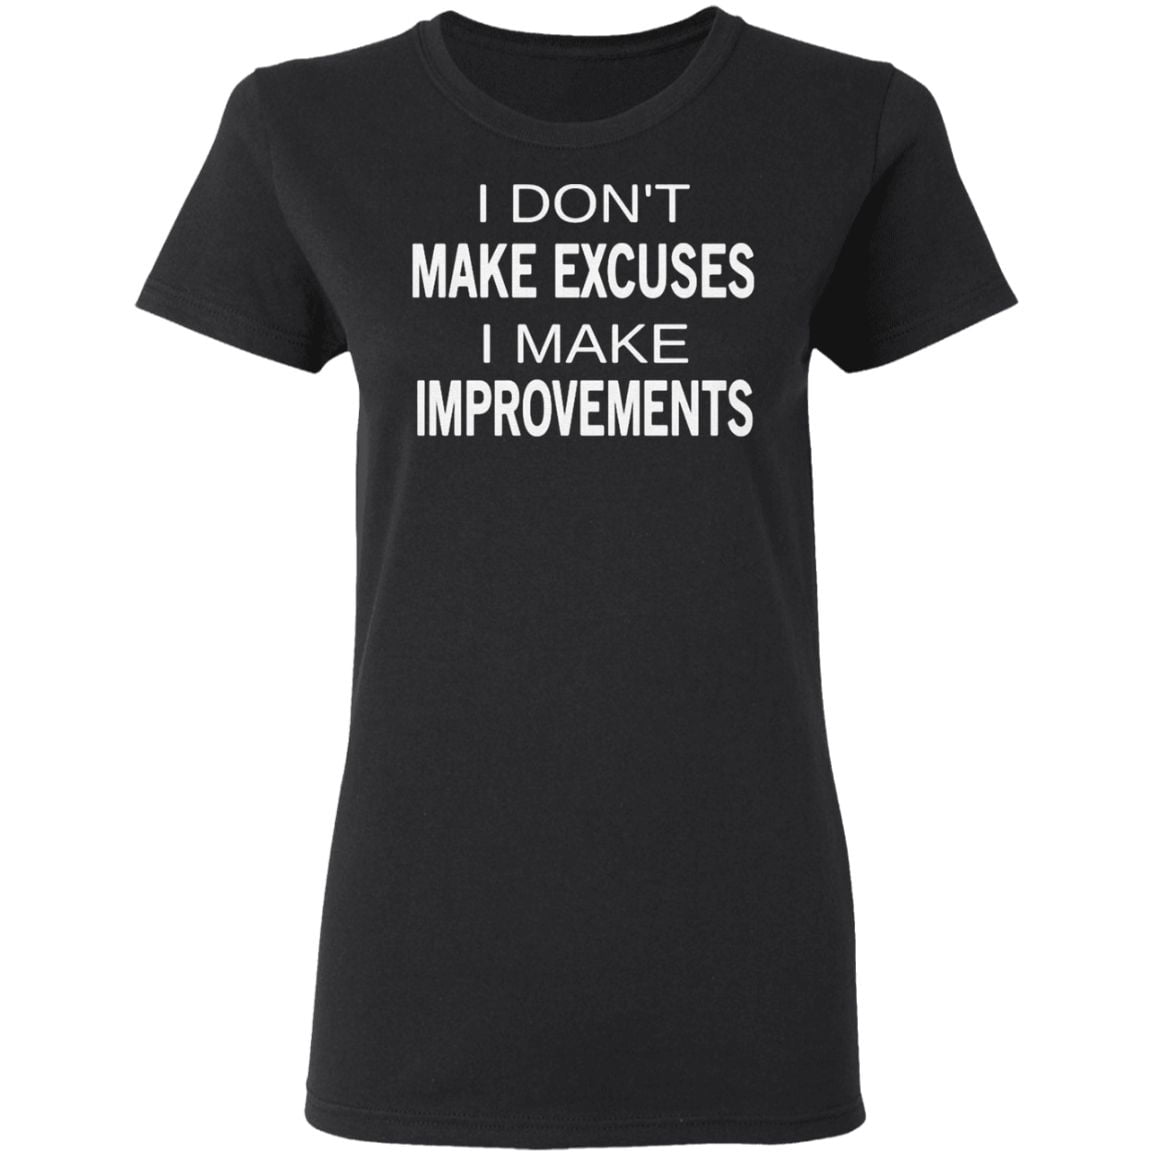 I don’t make excuses I make improvements t shirt